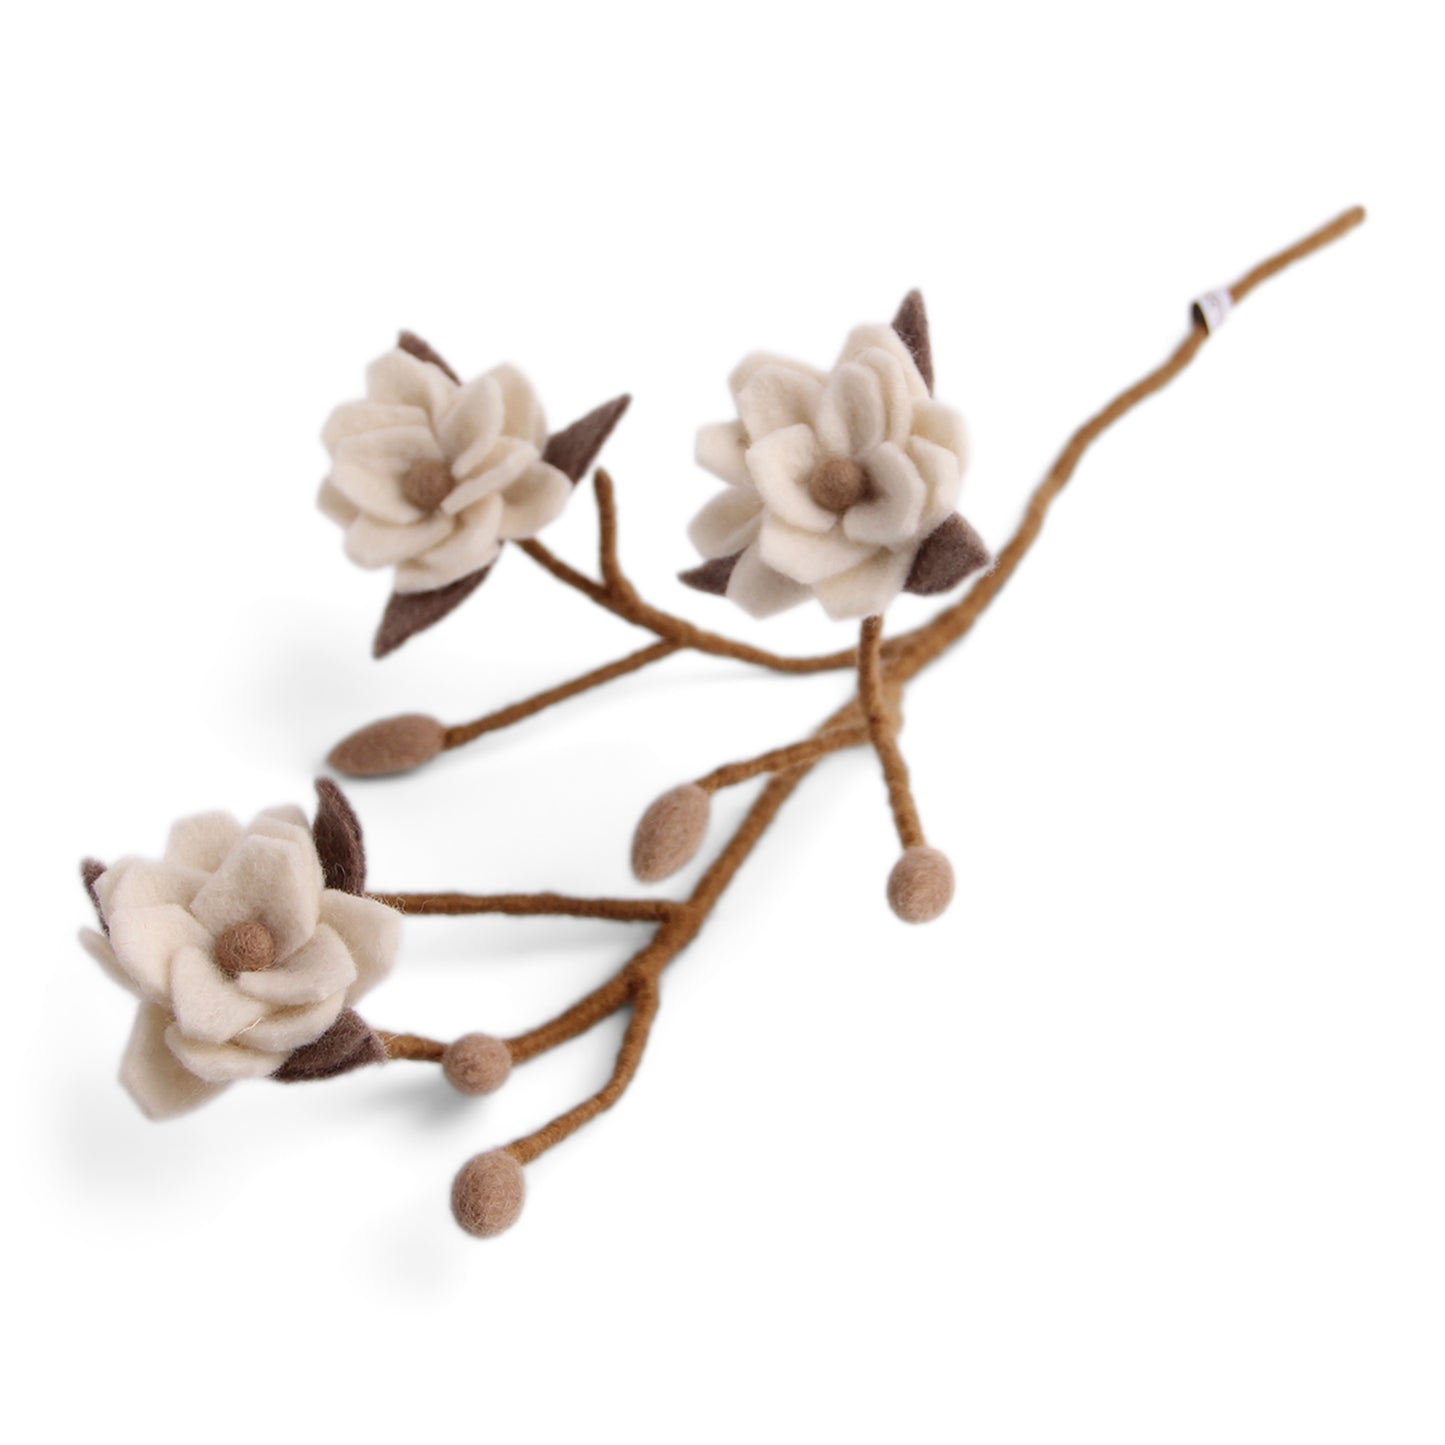 Tovad gren med blommor - Magnolia